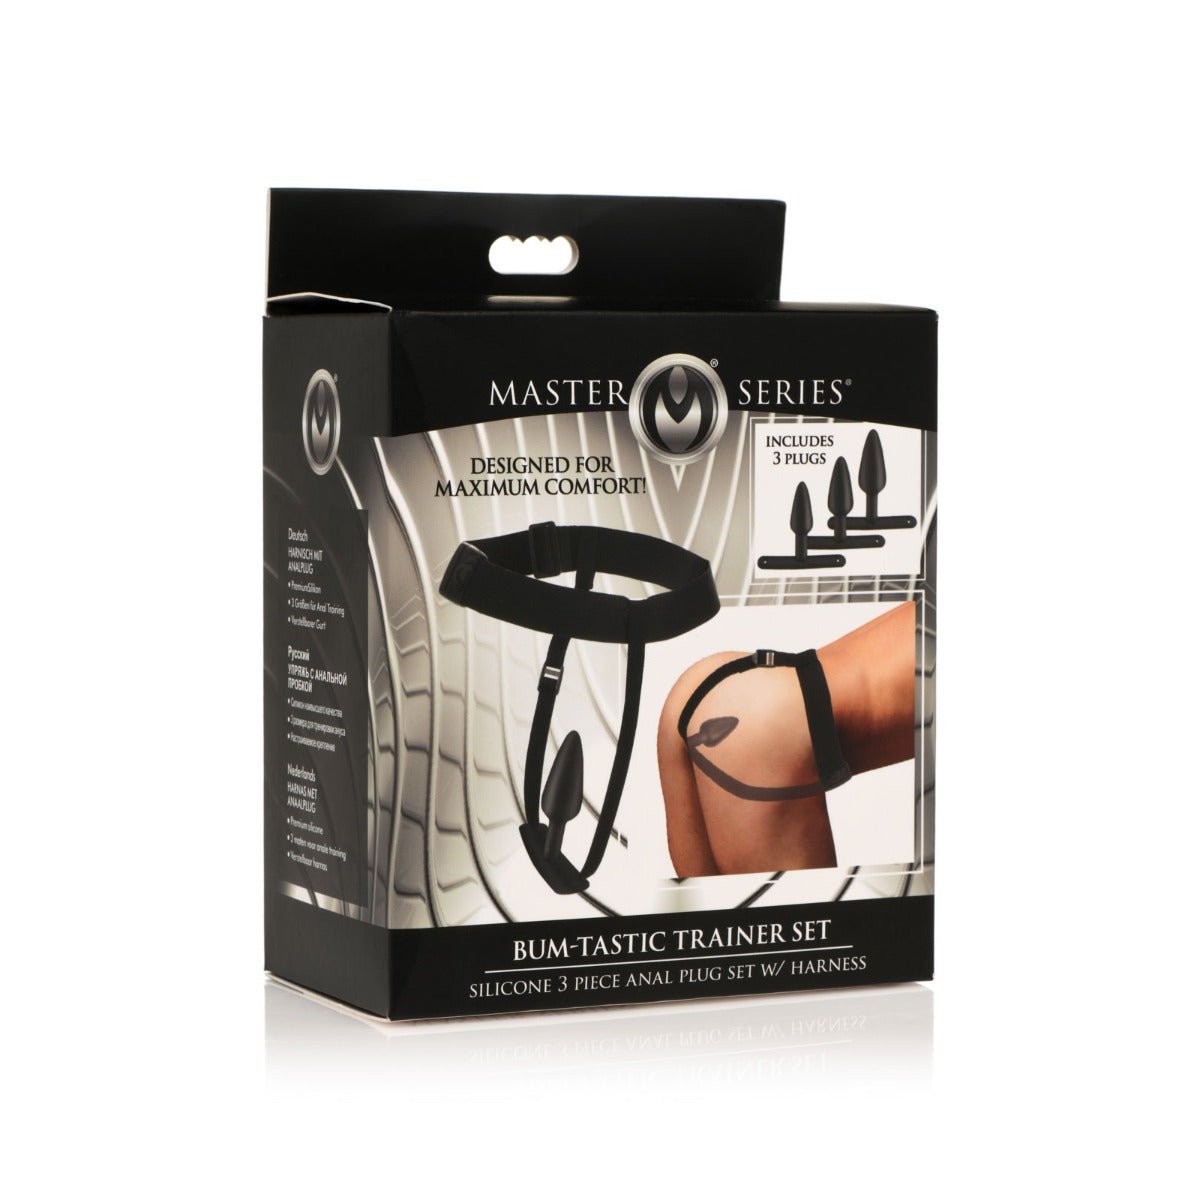 Butt Plugs Master Series Bum-Tastic Trainer Set Silicone 3 Piece Anal Plug Set w/ Harness   